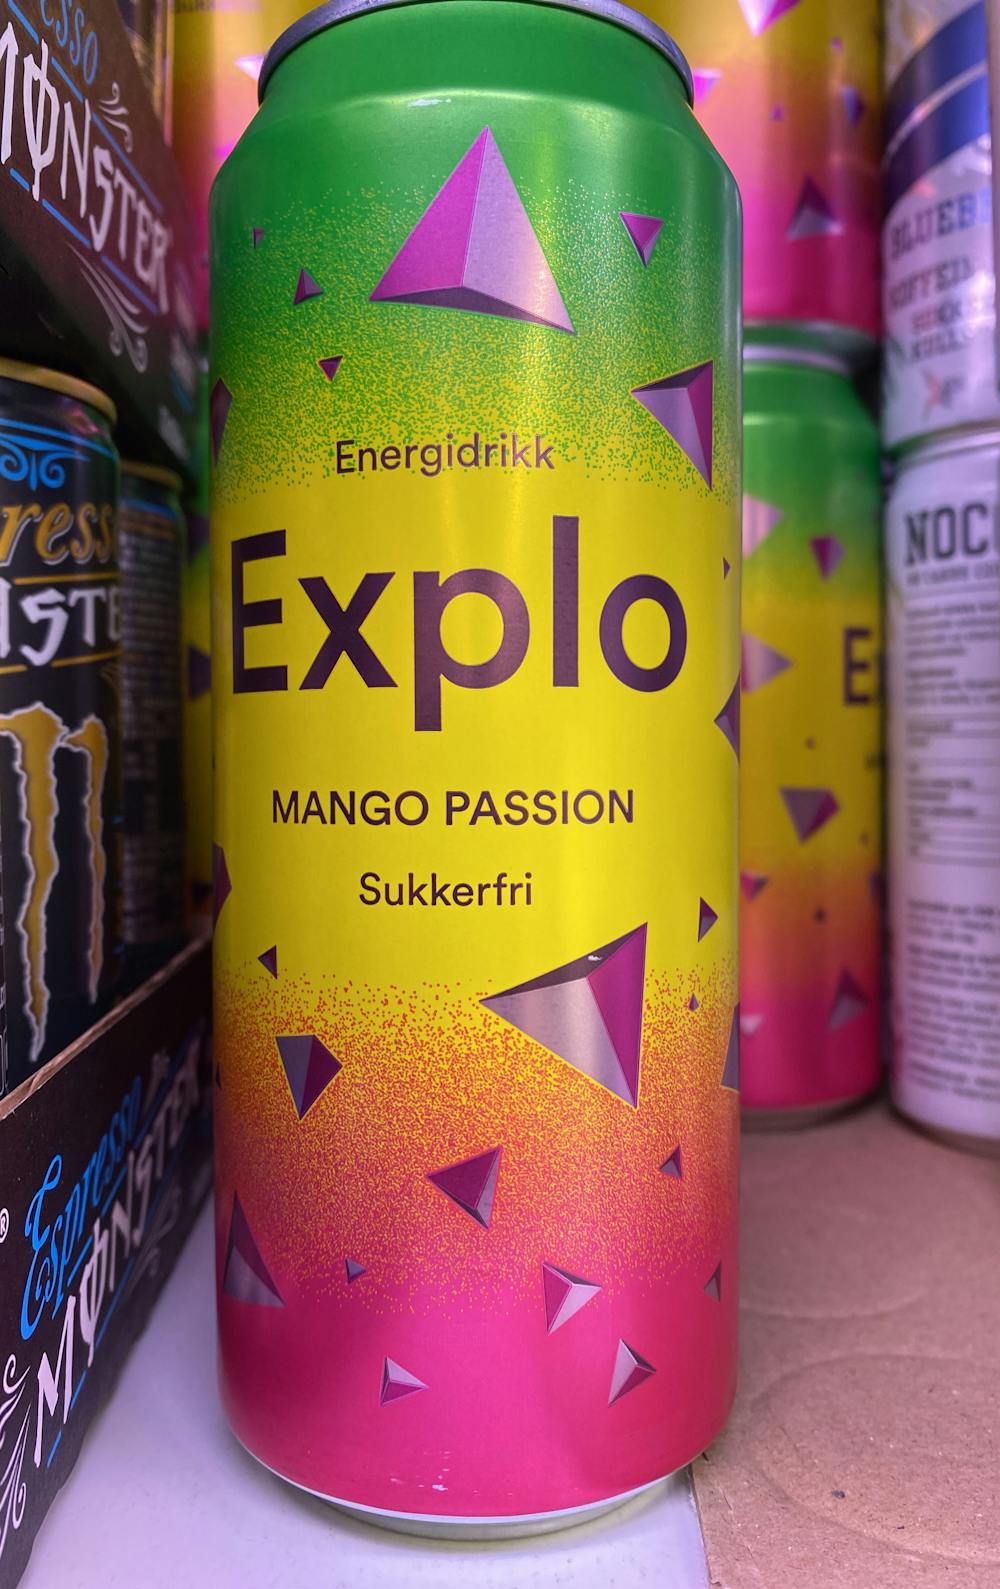 Explo mango passion, Mack